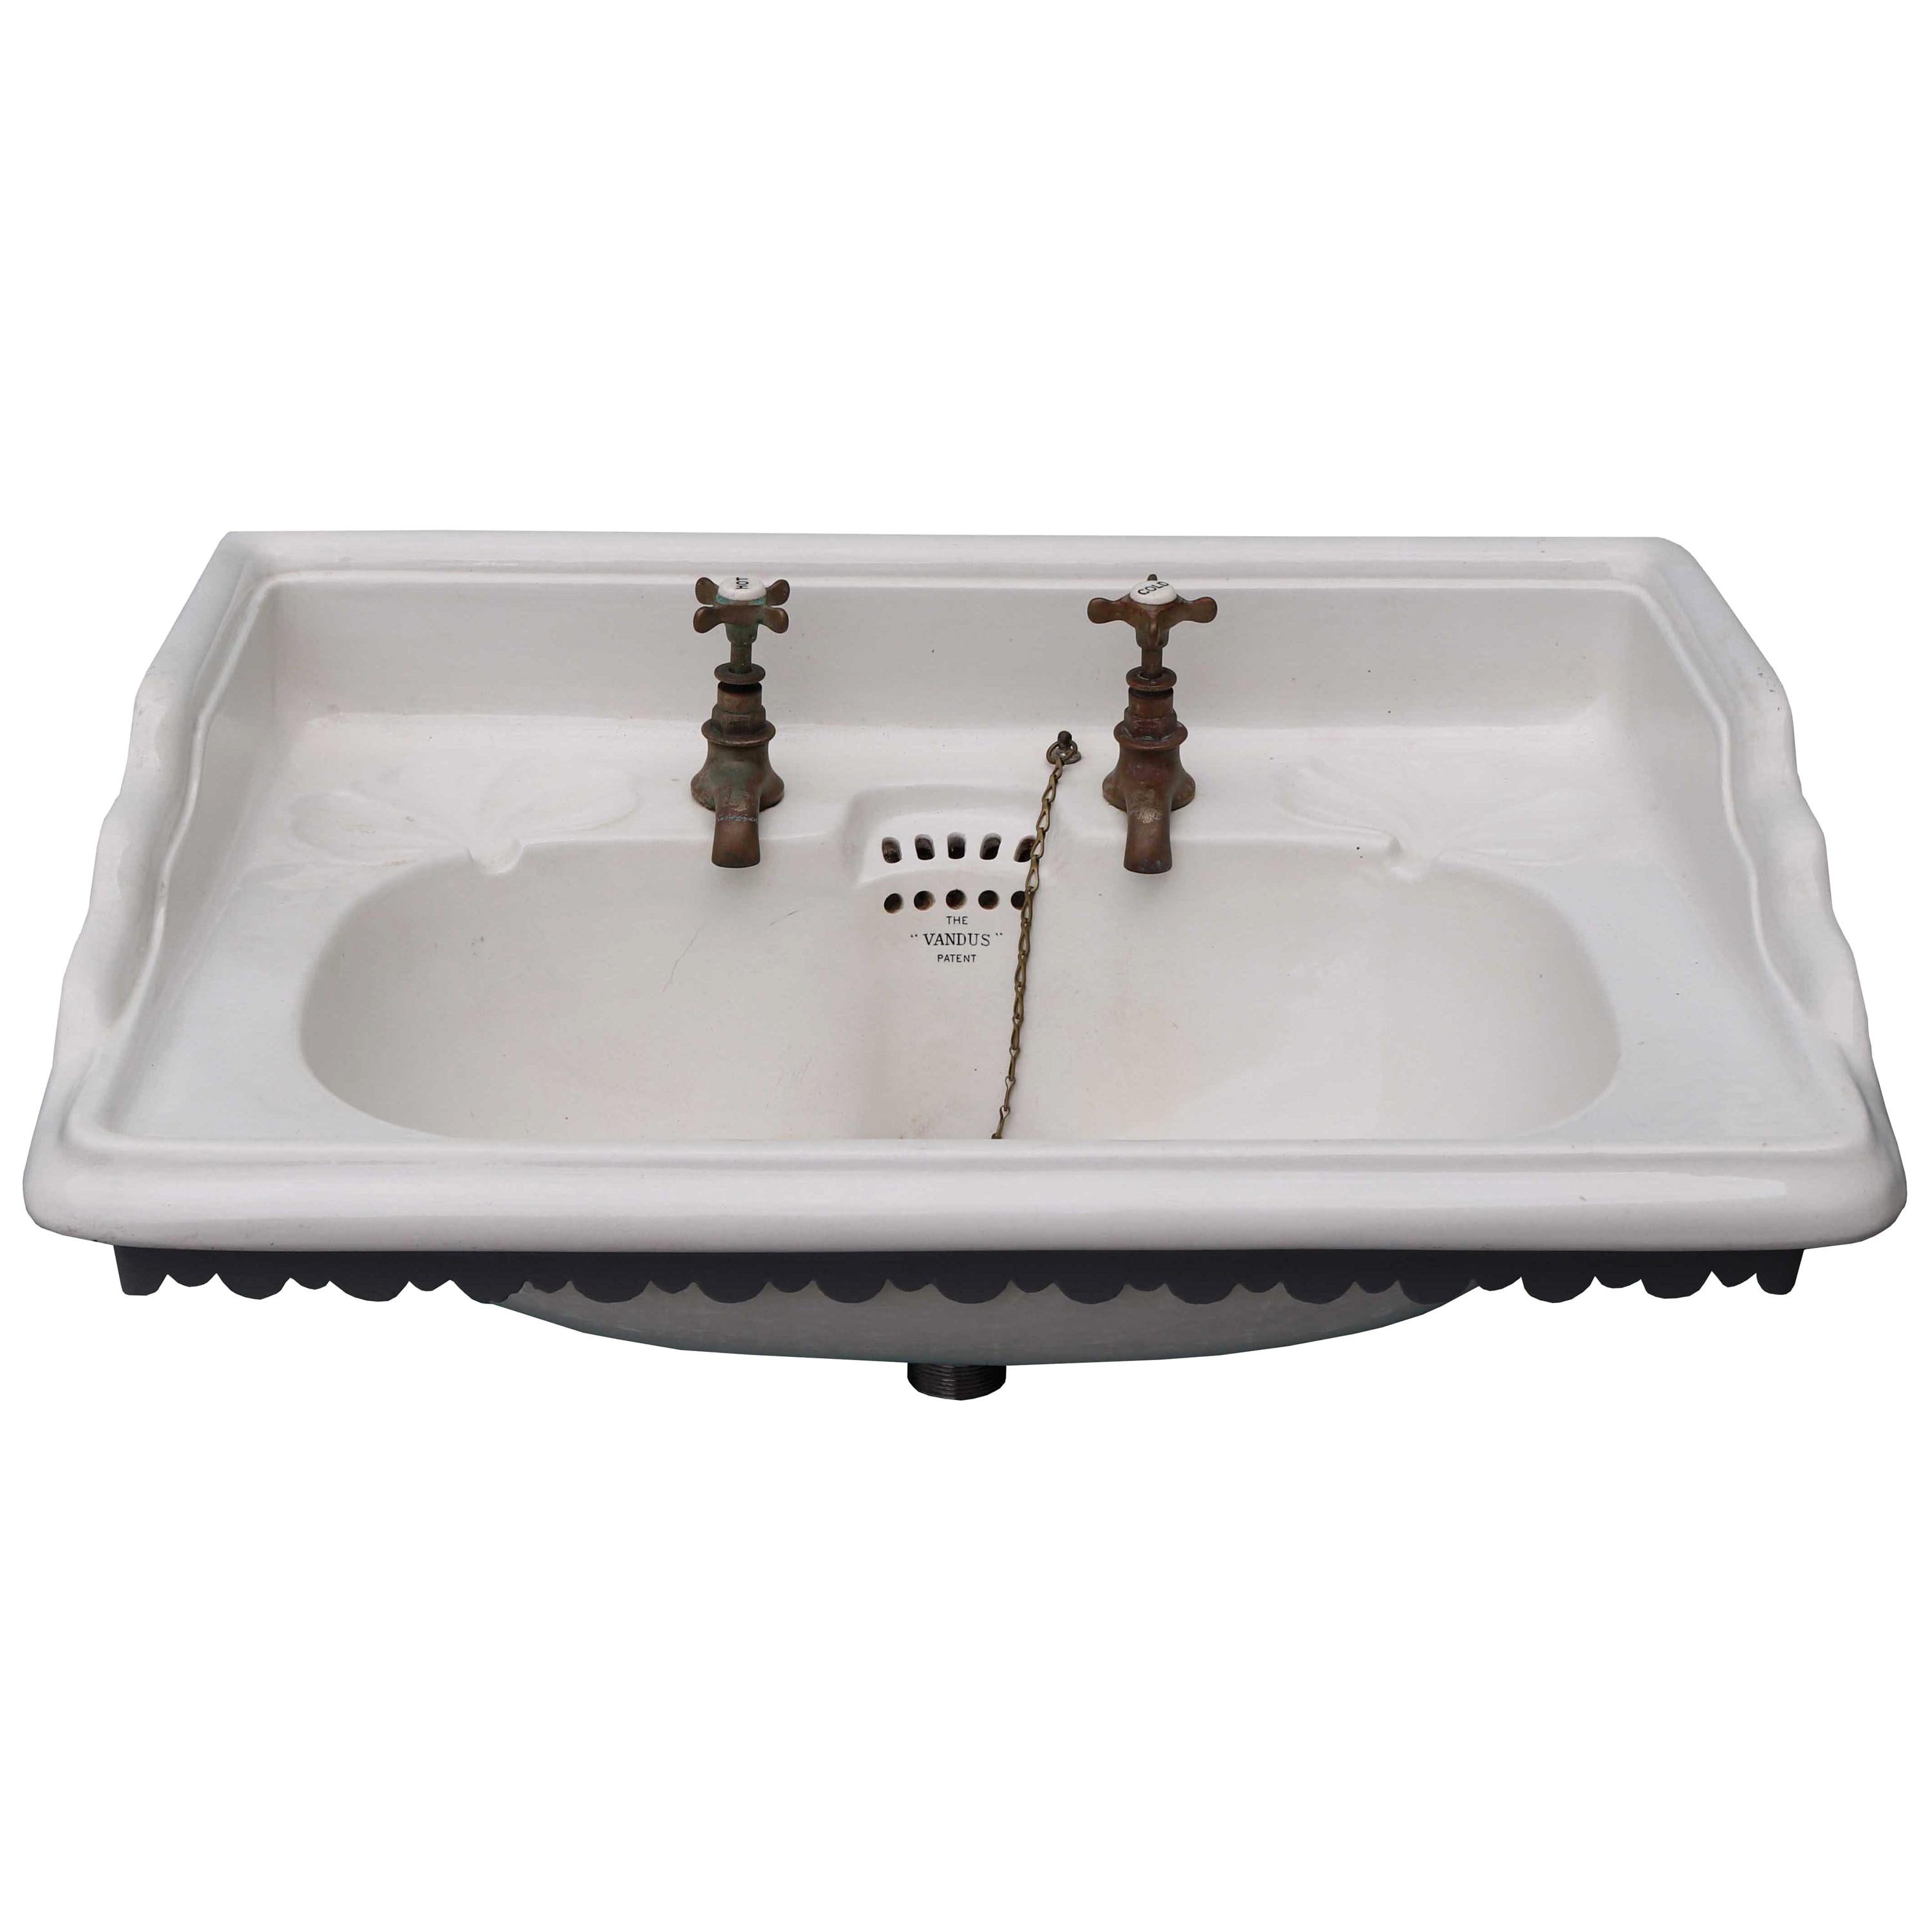 Antique ‘Vandus’ Wall Mounted Sink/Basin